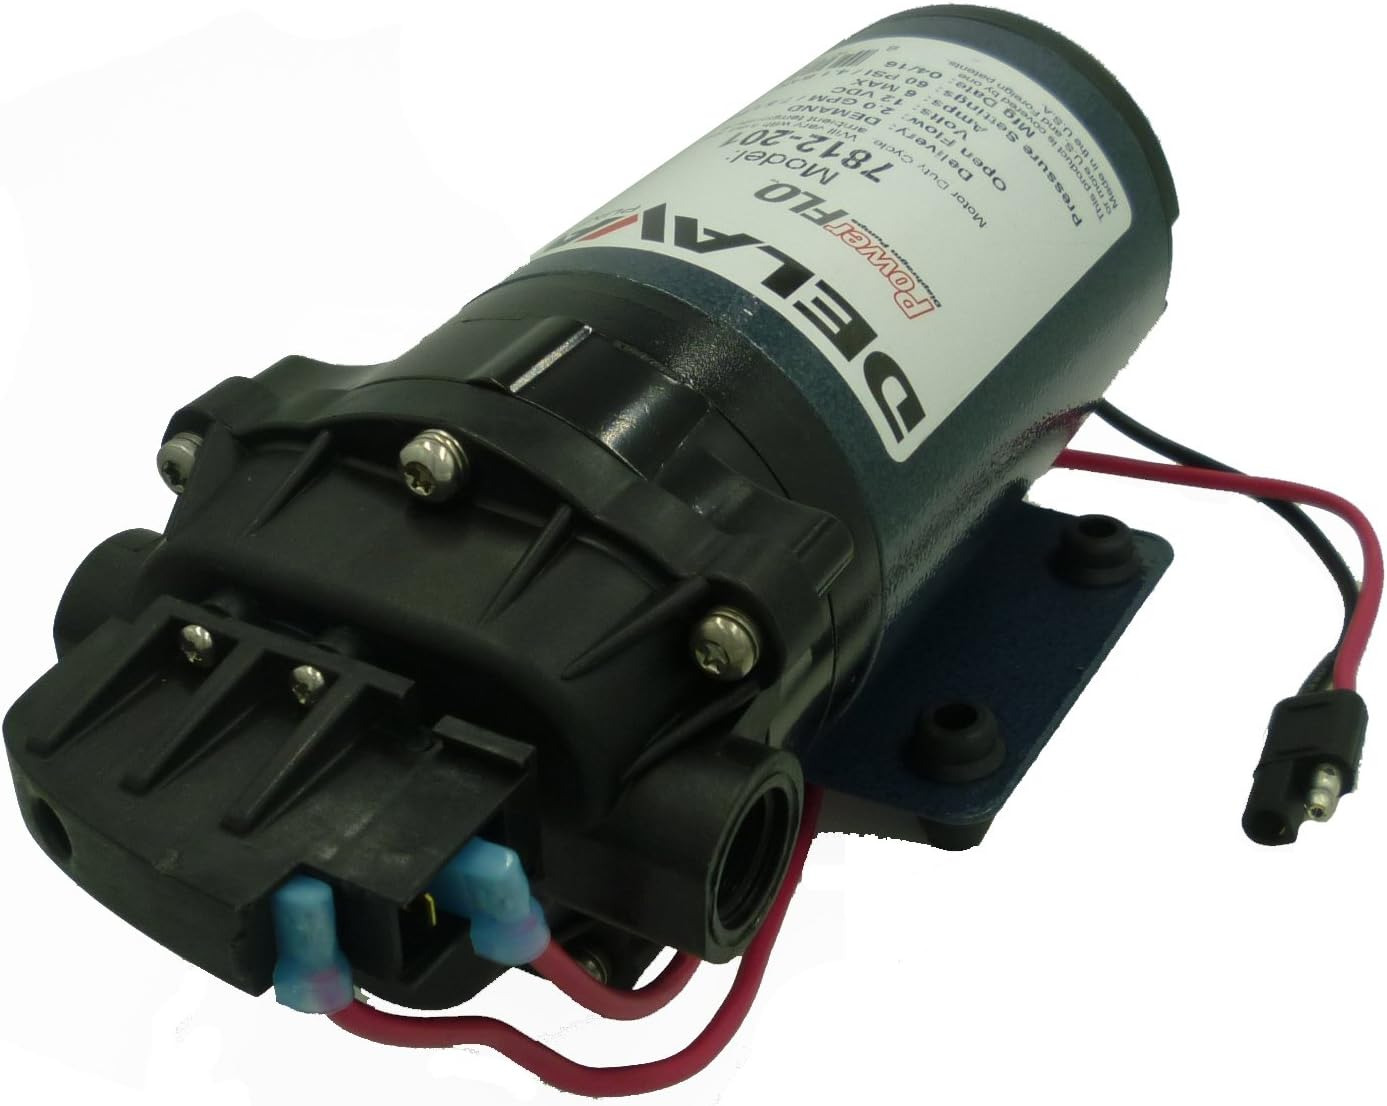 Delavan 7812-201-SB Powerflo Electric 12 VDC Diaphragm Pump with Demand Switch, 